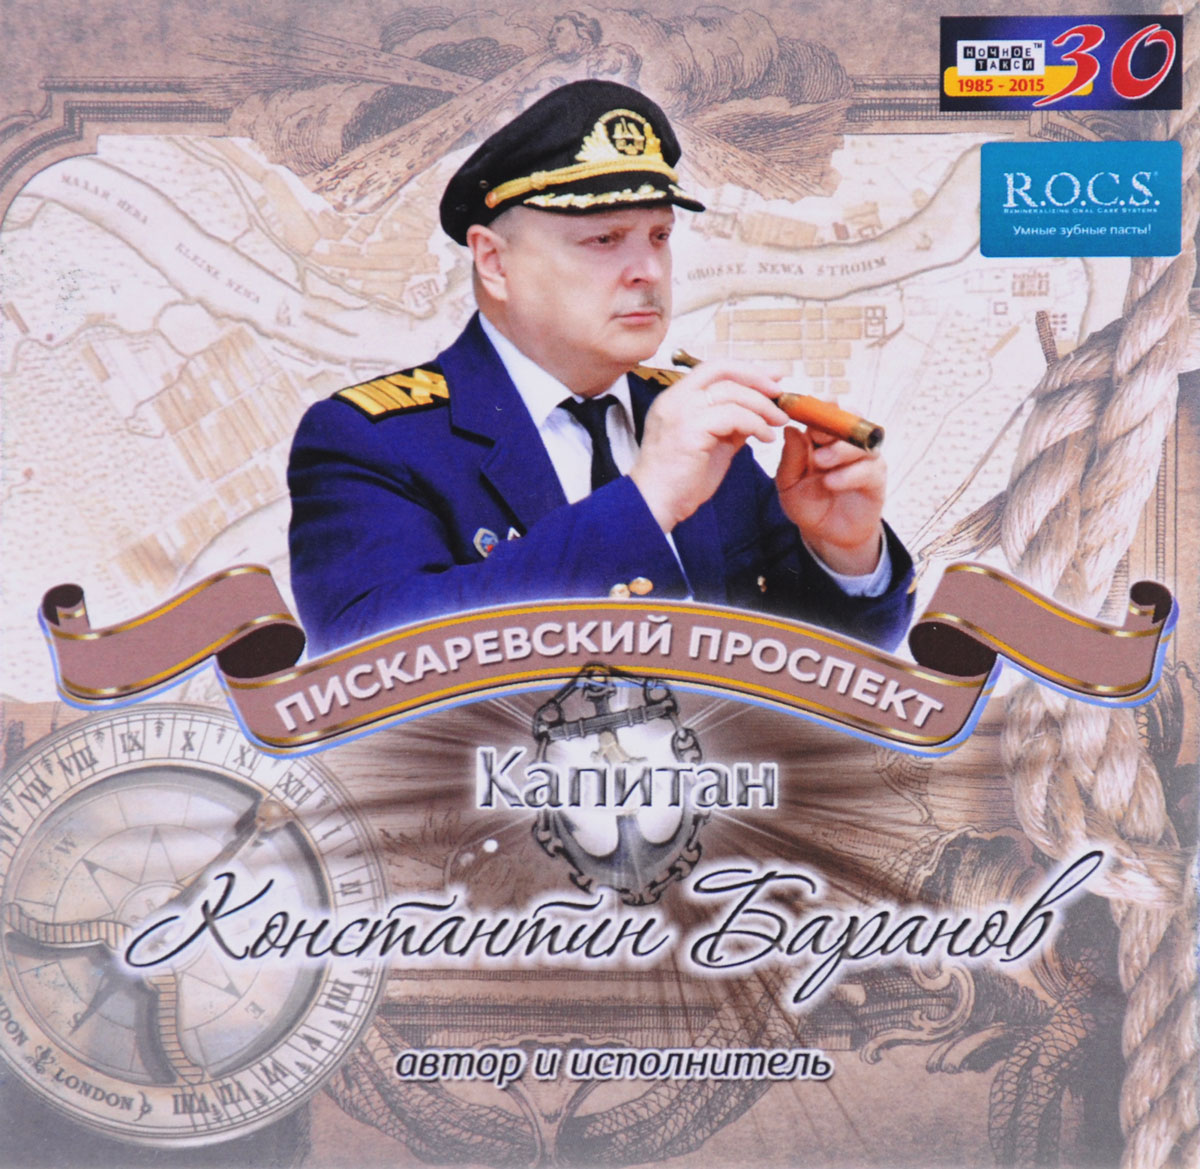 Капитан Константин Баранов. Пискаревский проспект